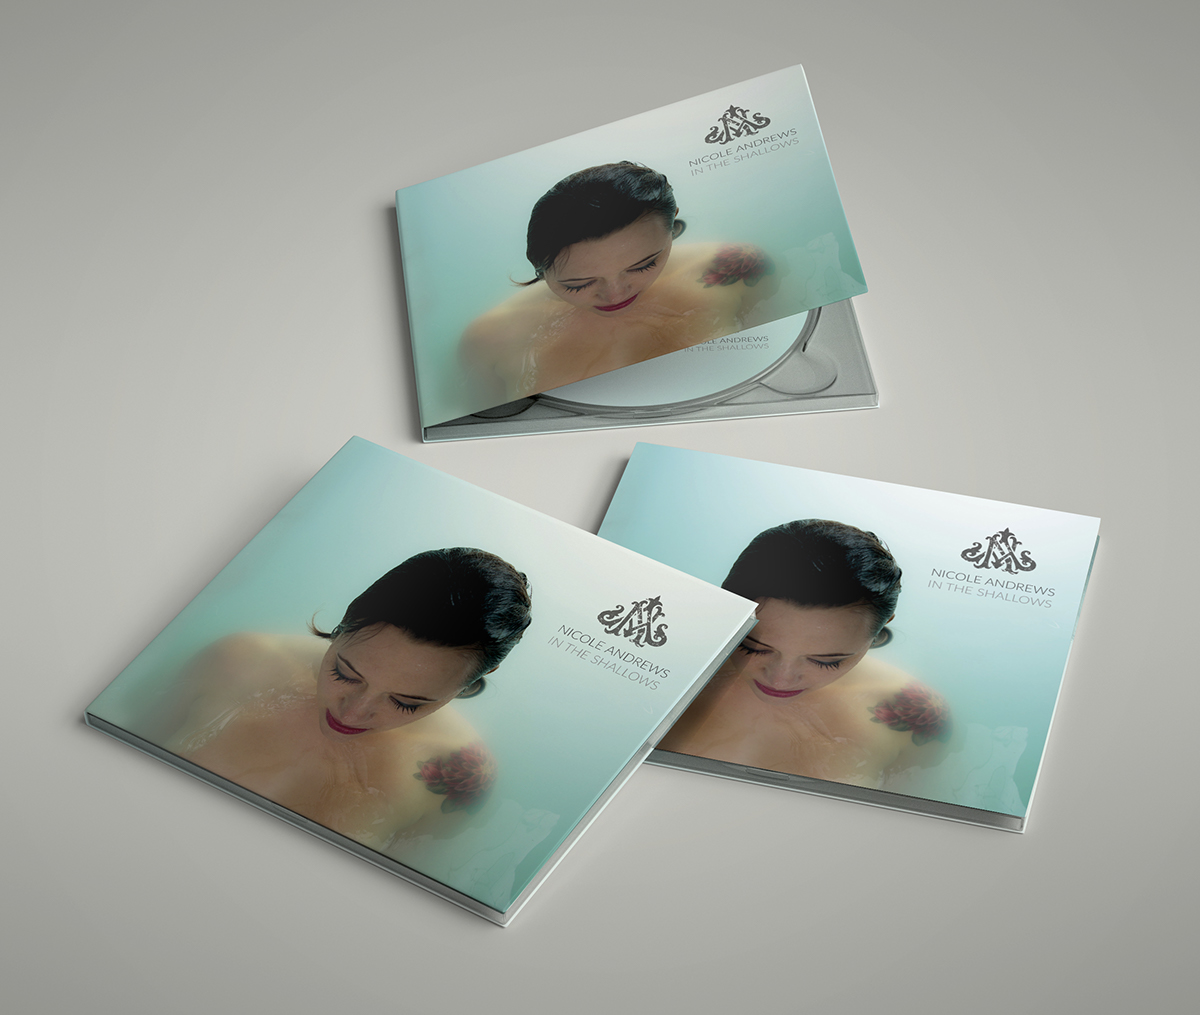 water underwater brett stanley album cover musician artwork